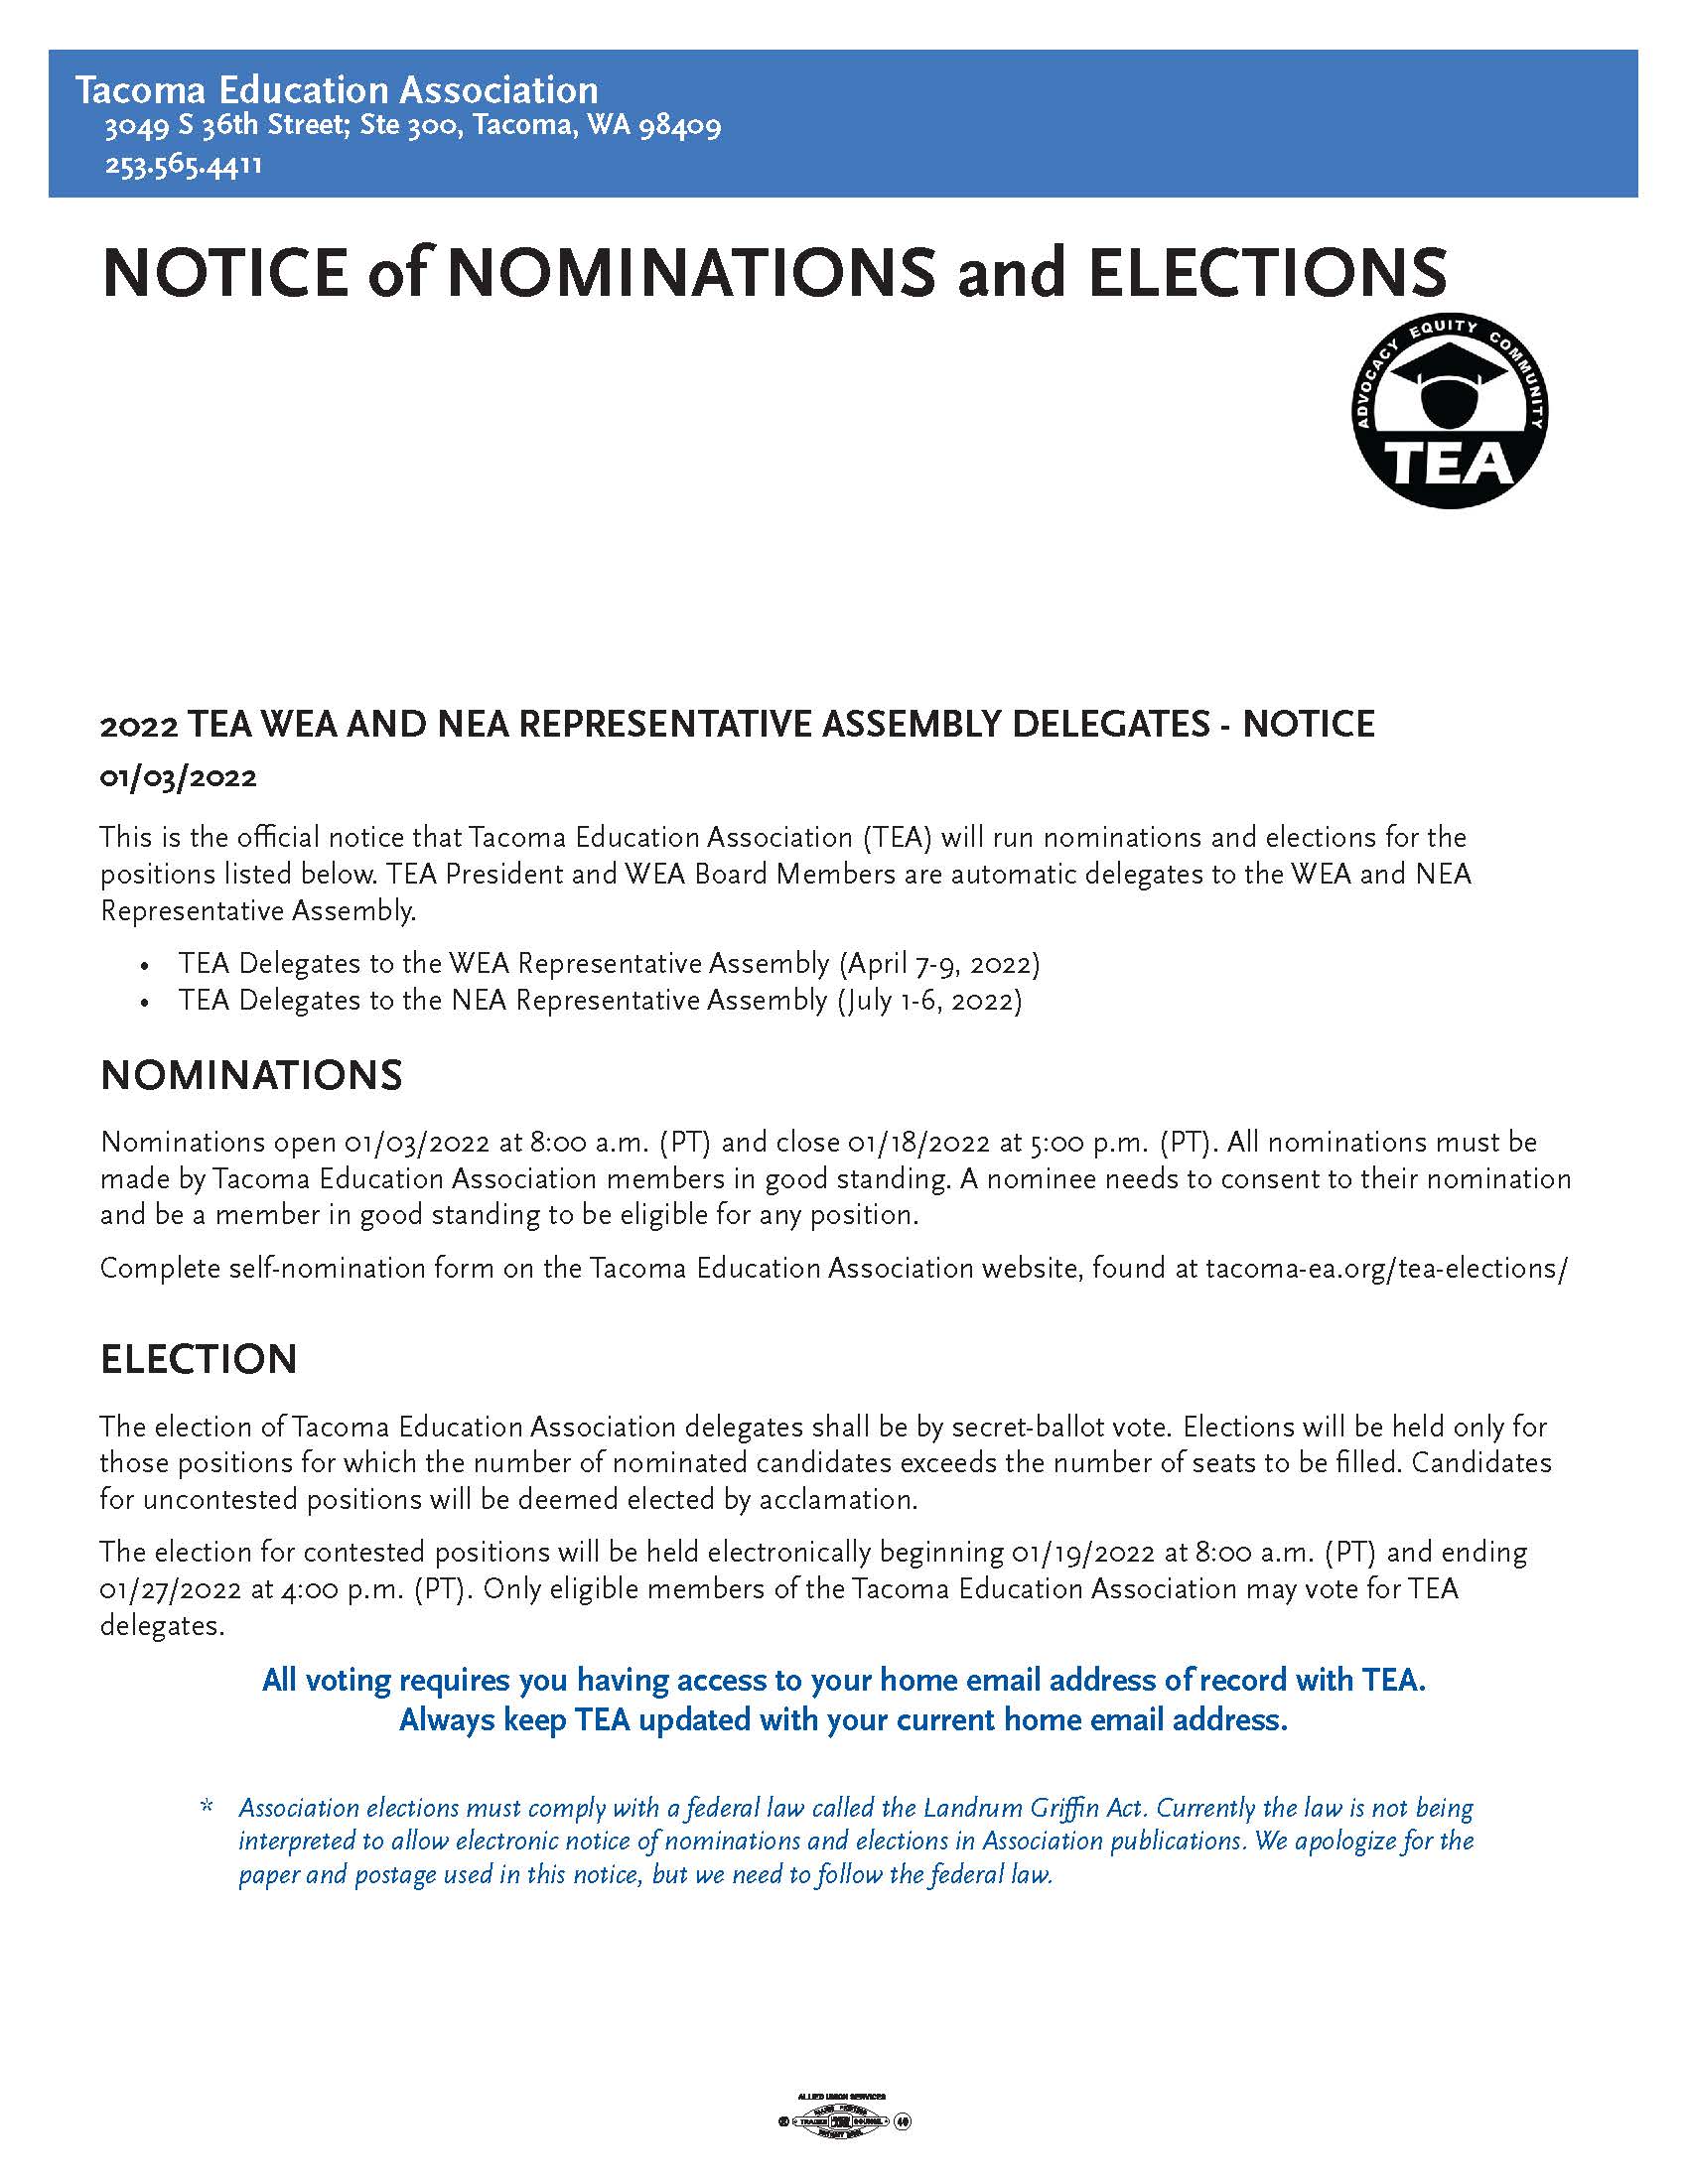 TEA WEA NEA RA Nomination and Election Notice